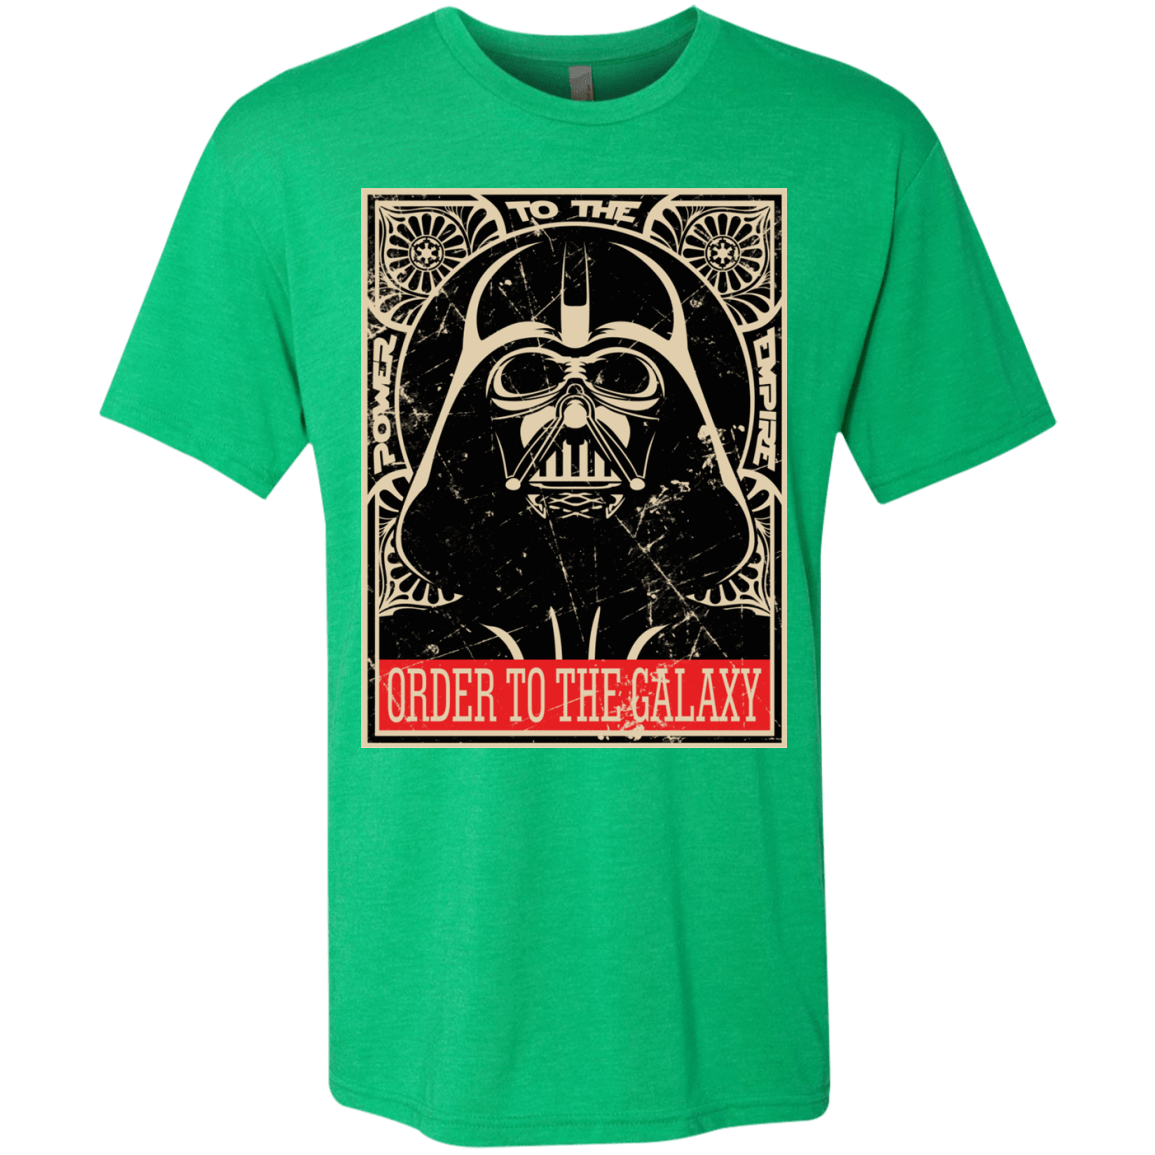 T-Shirts Envy / S Order to the galaxy Men's Triblend T-Shirt